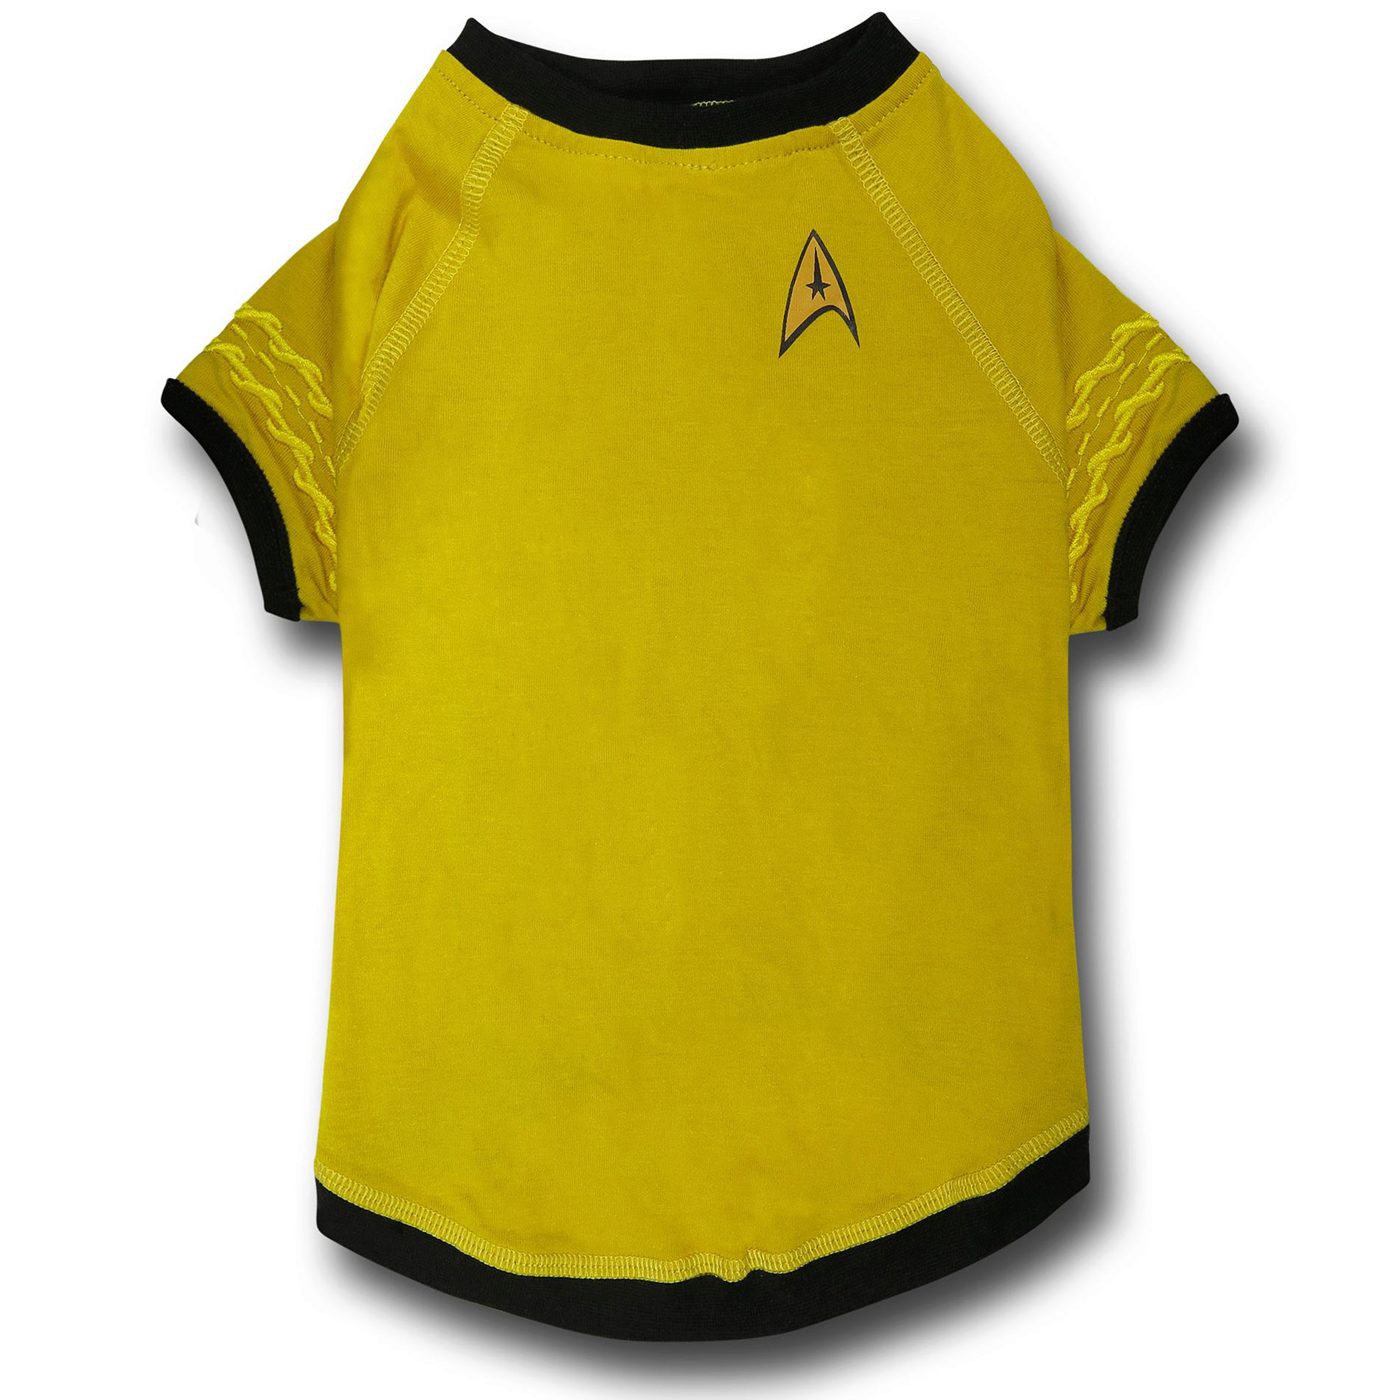 Star Trek Command Uniform Dog Shirt